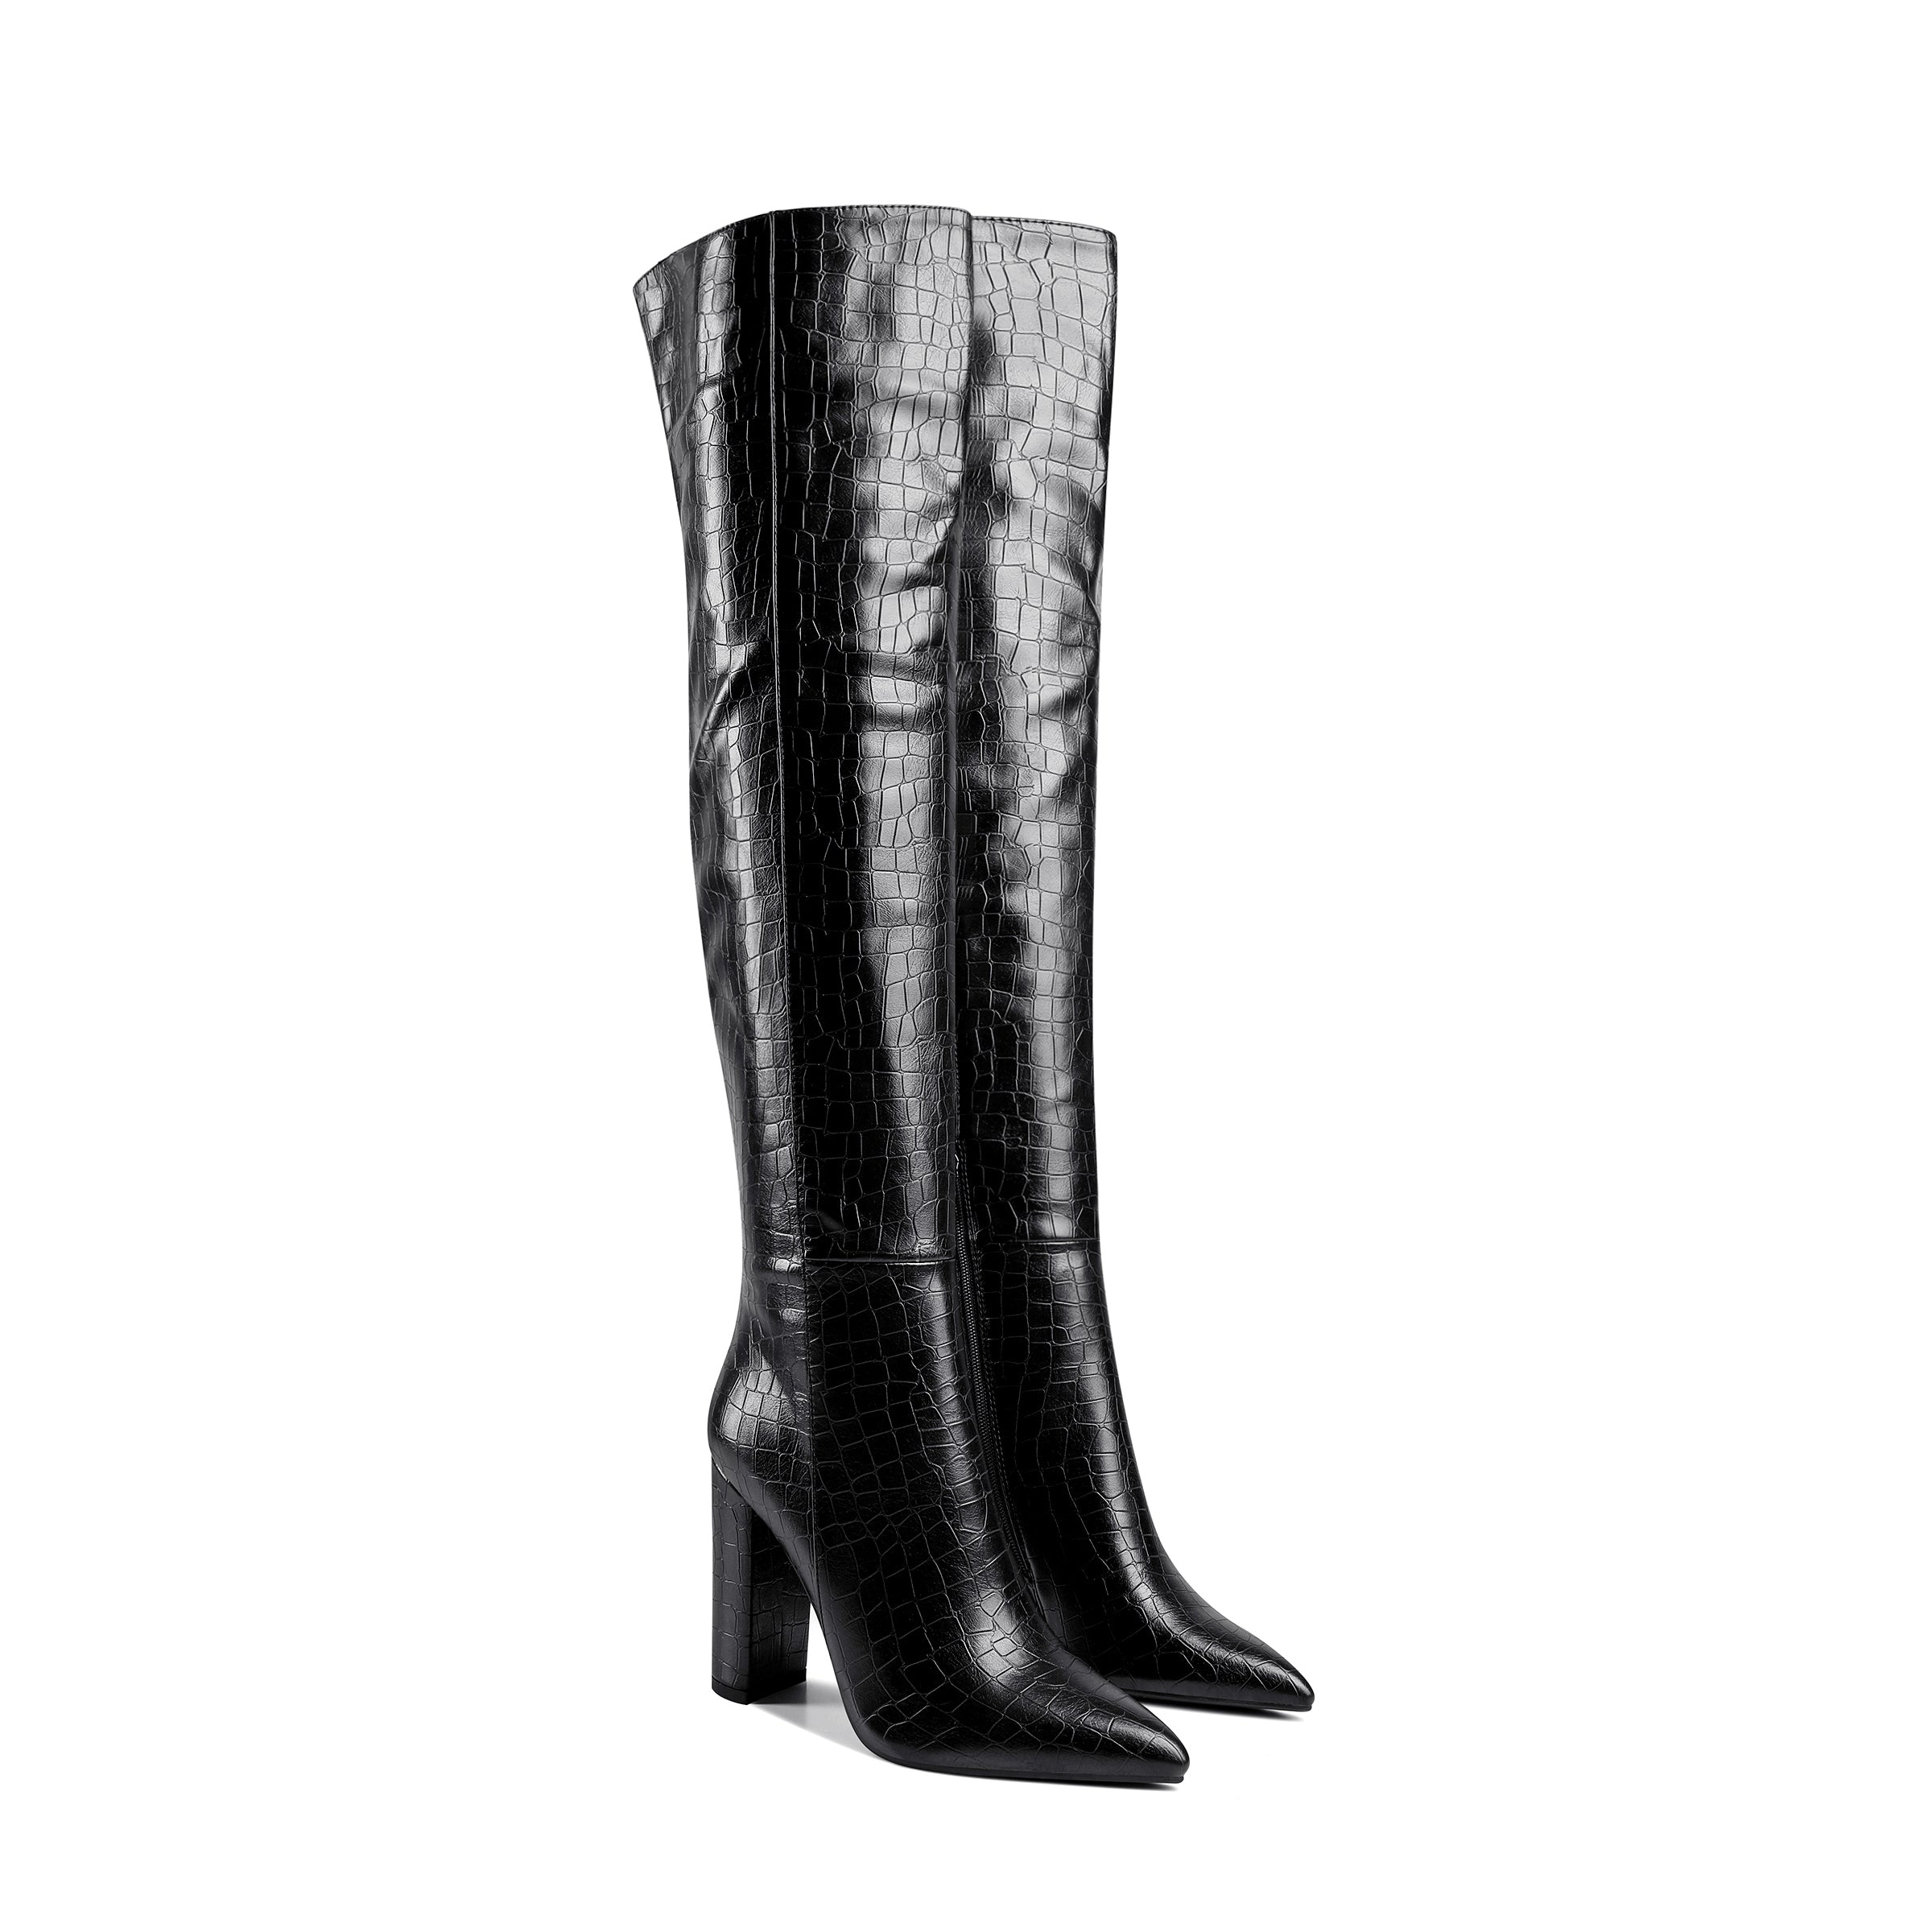 Bigsizeheels Embossed leather pointed toe chunky heel boots - Black freeshipping - bigsizeheel®-size5-size15 -All Plus Sizes Available!